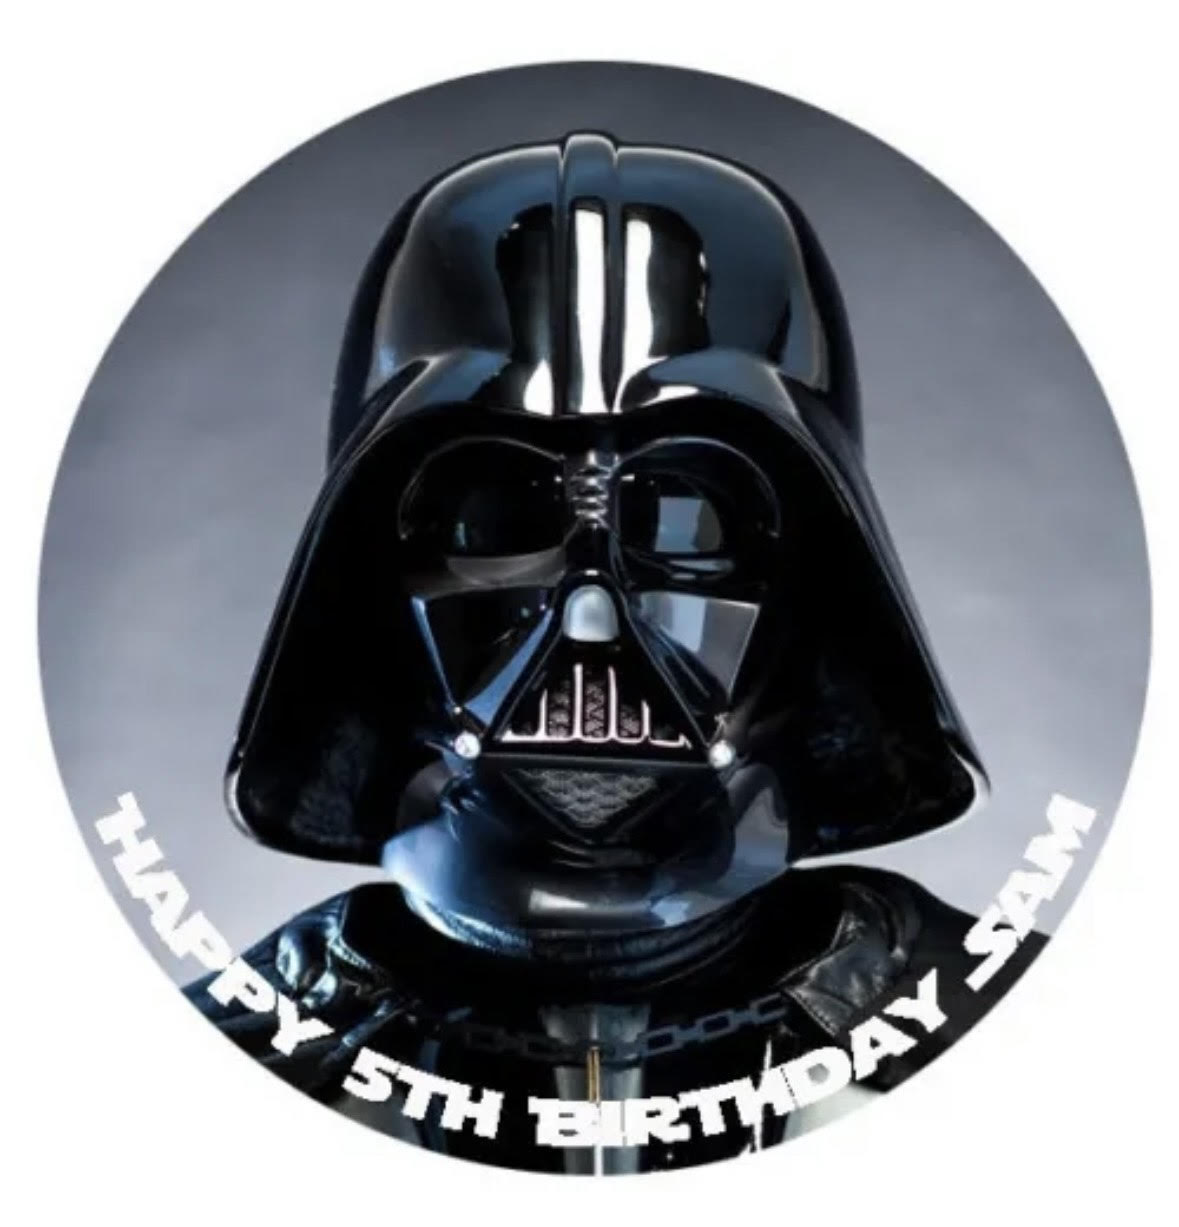 Star Wars Darth Vader Round Cake Edible Icing Image Topper 19cm